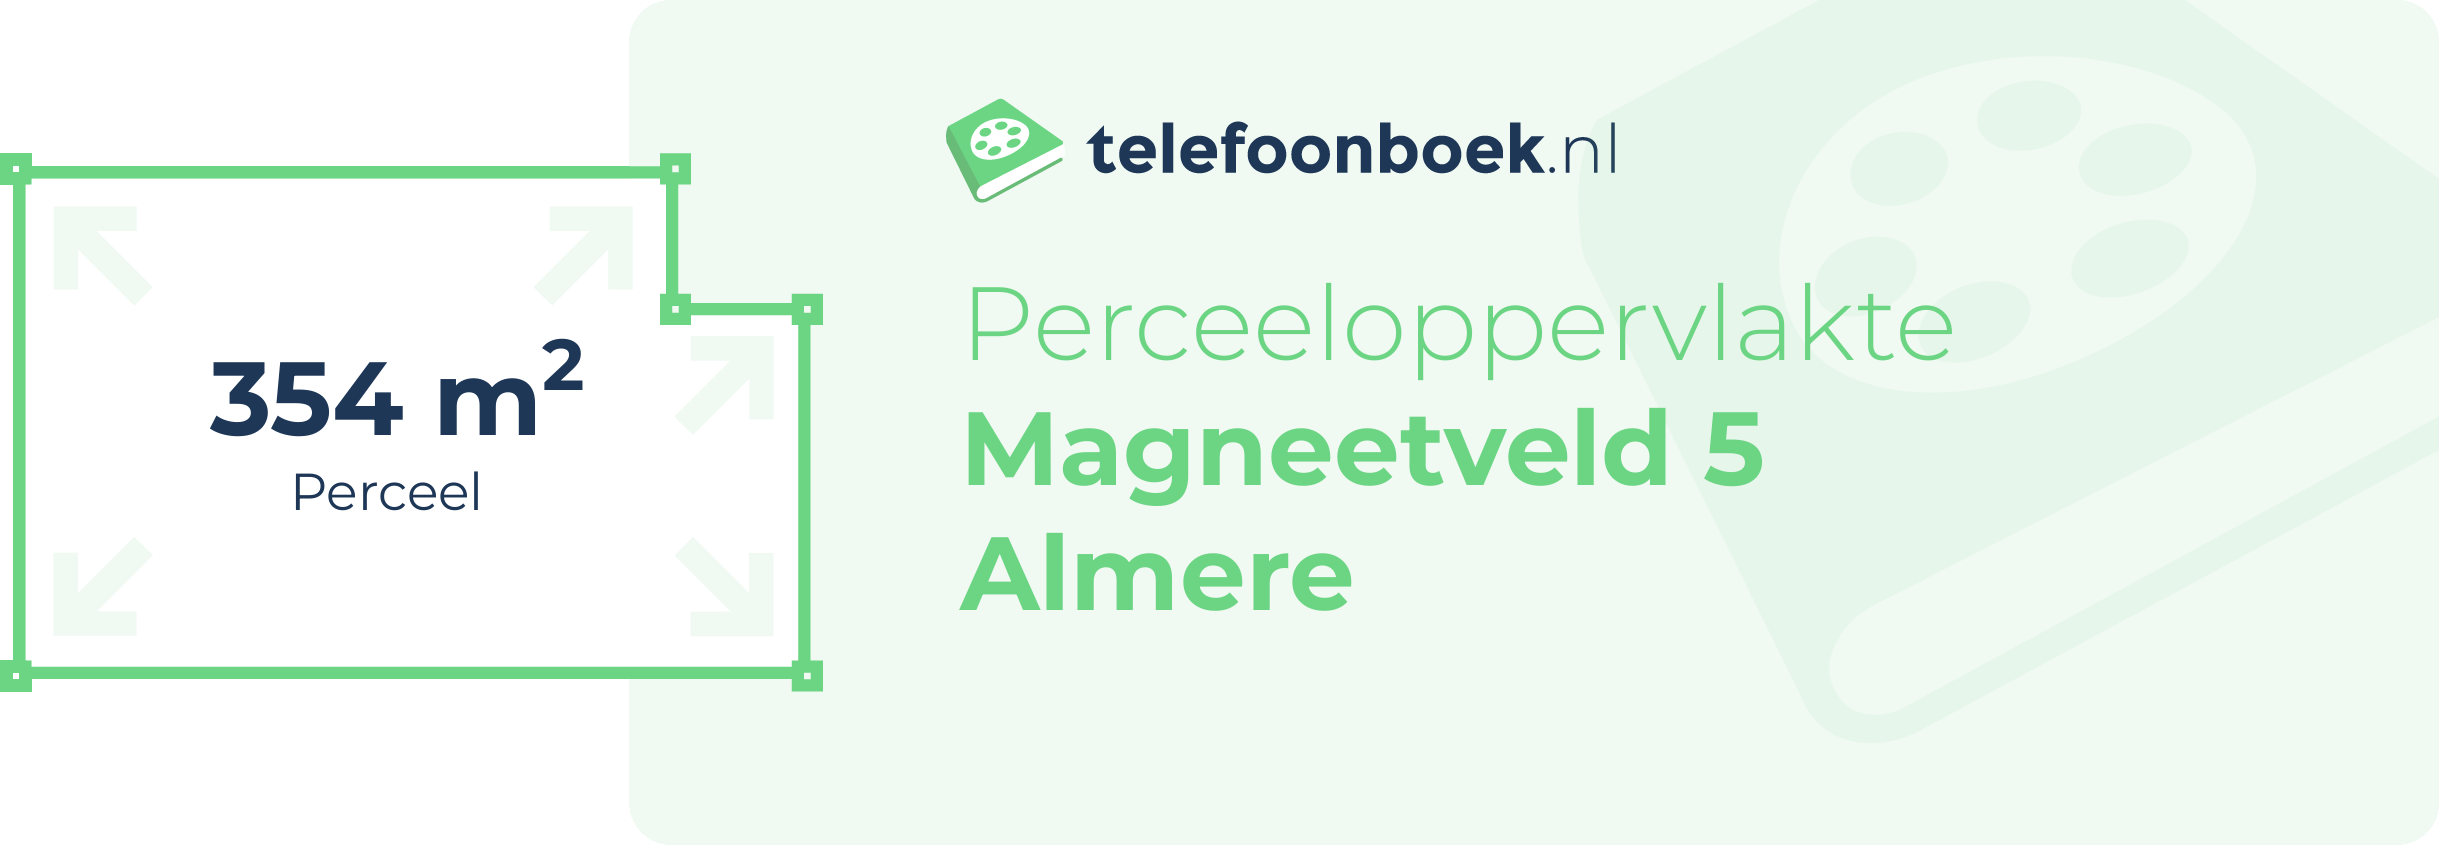 Perceeloppervlakte Magneetveld 5 Almere